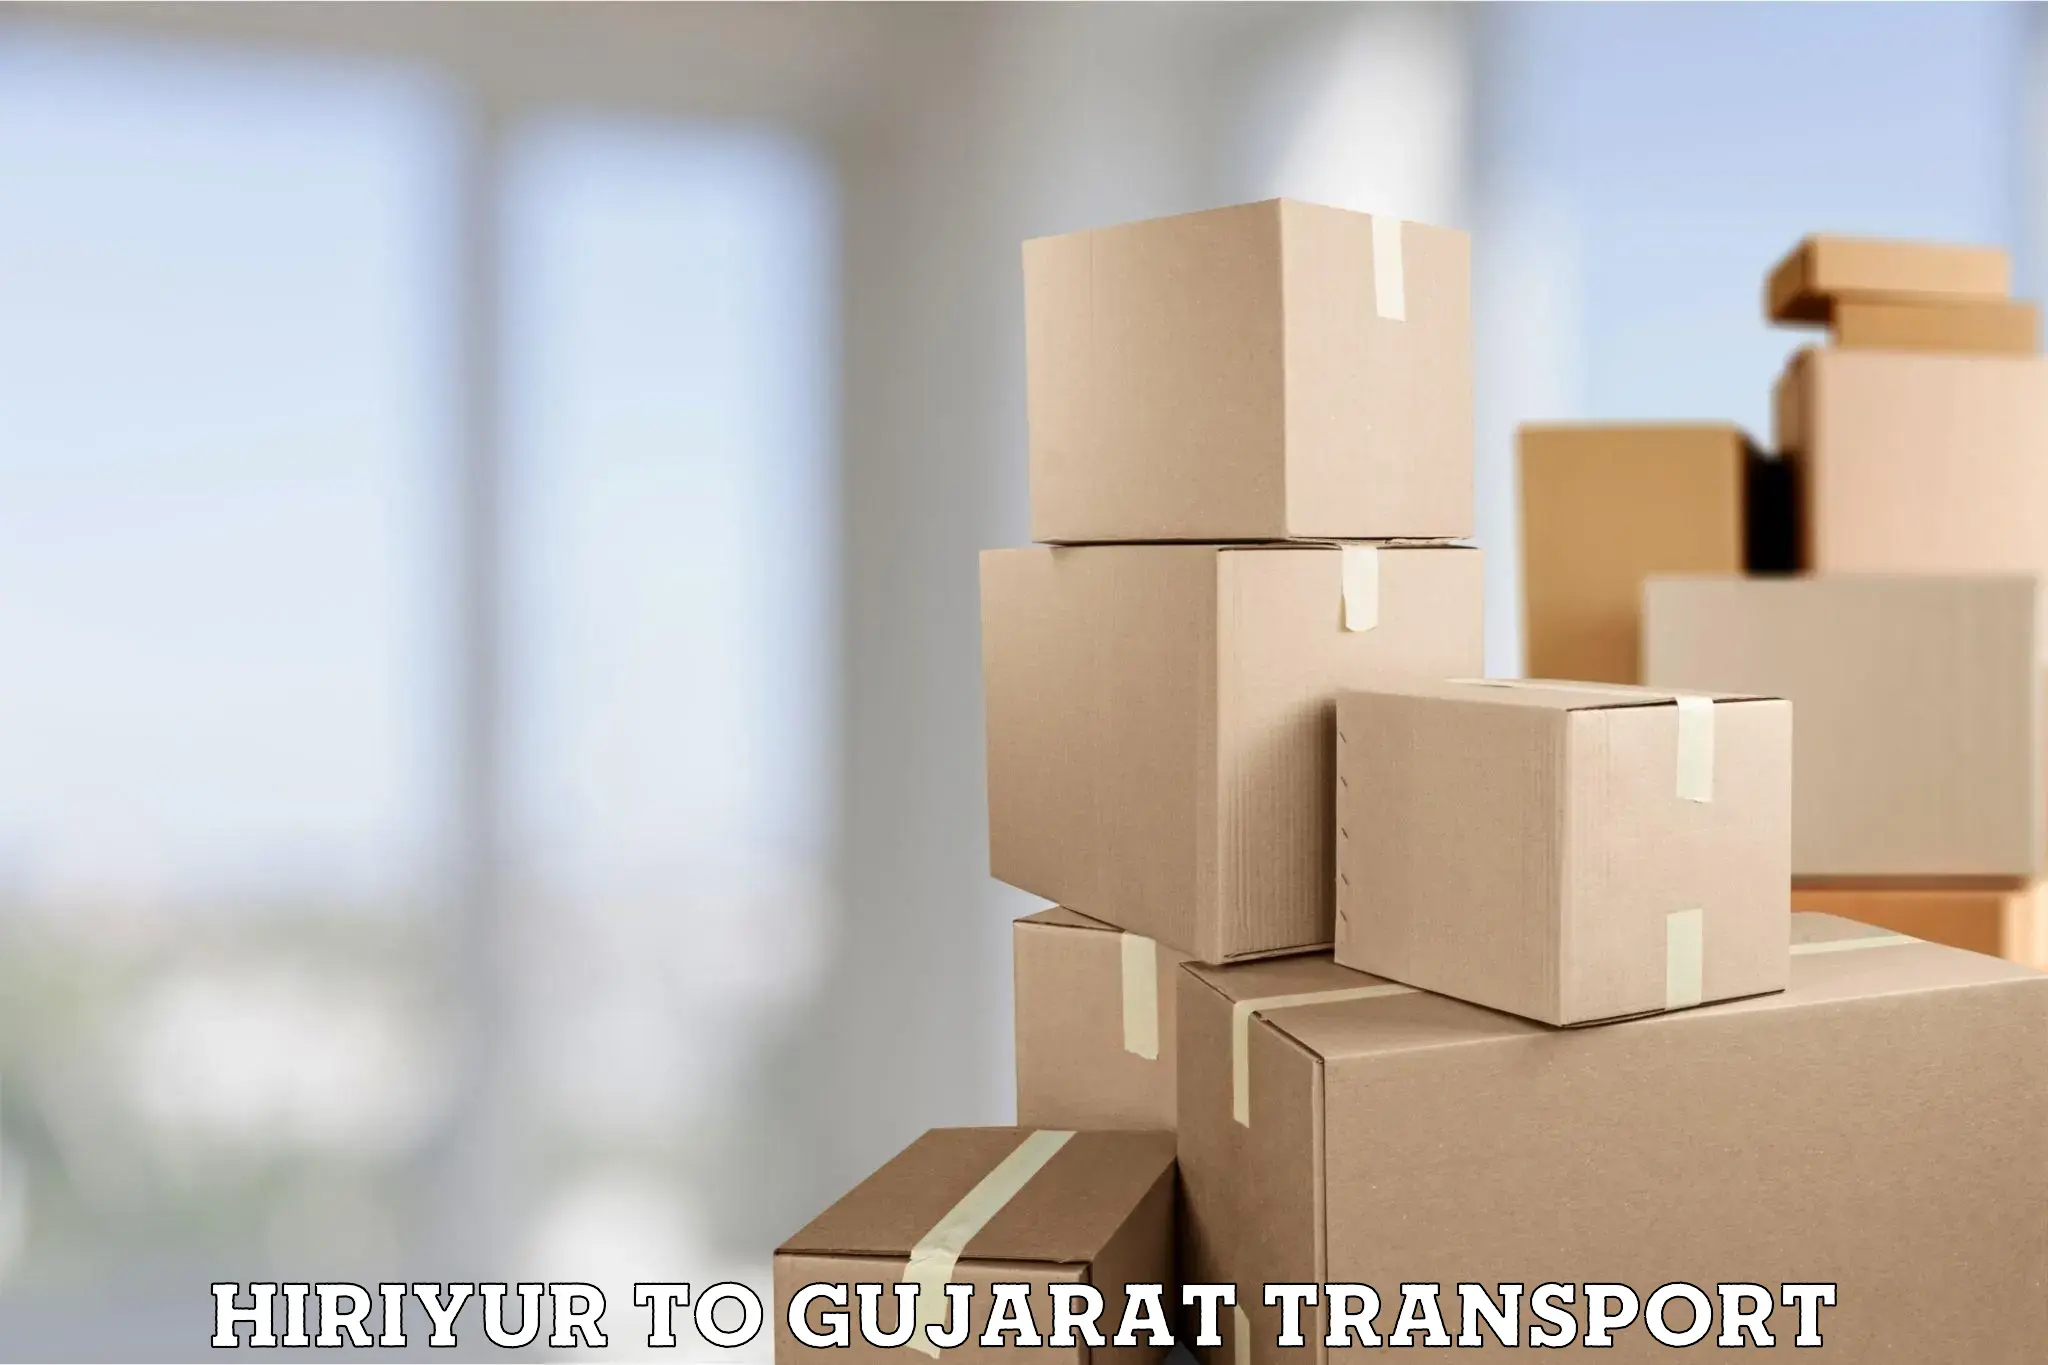 Delivery service Hiriyur to Tarapur